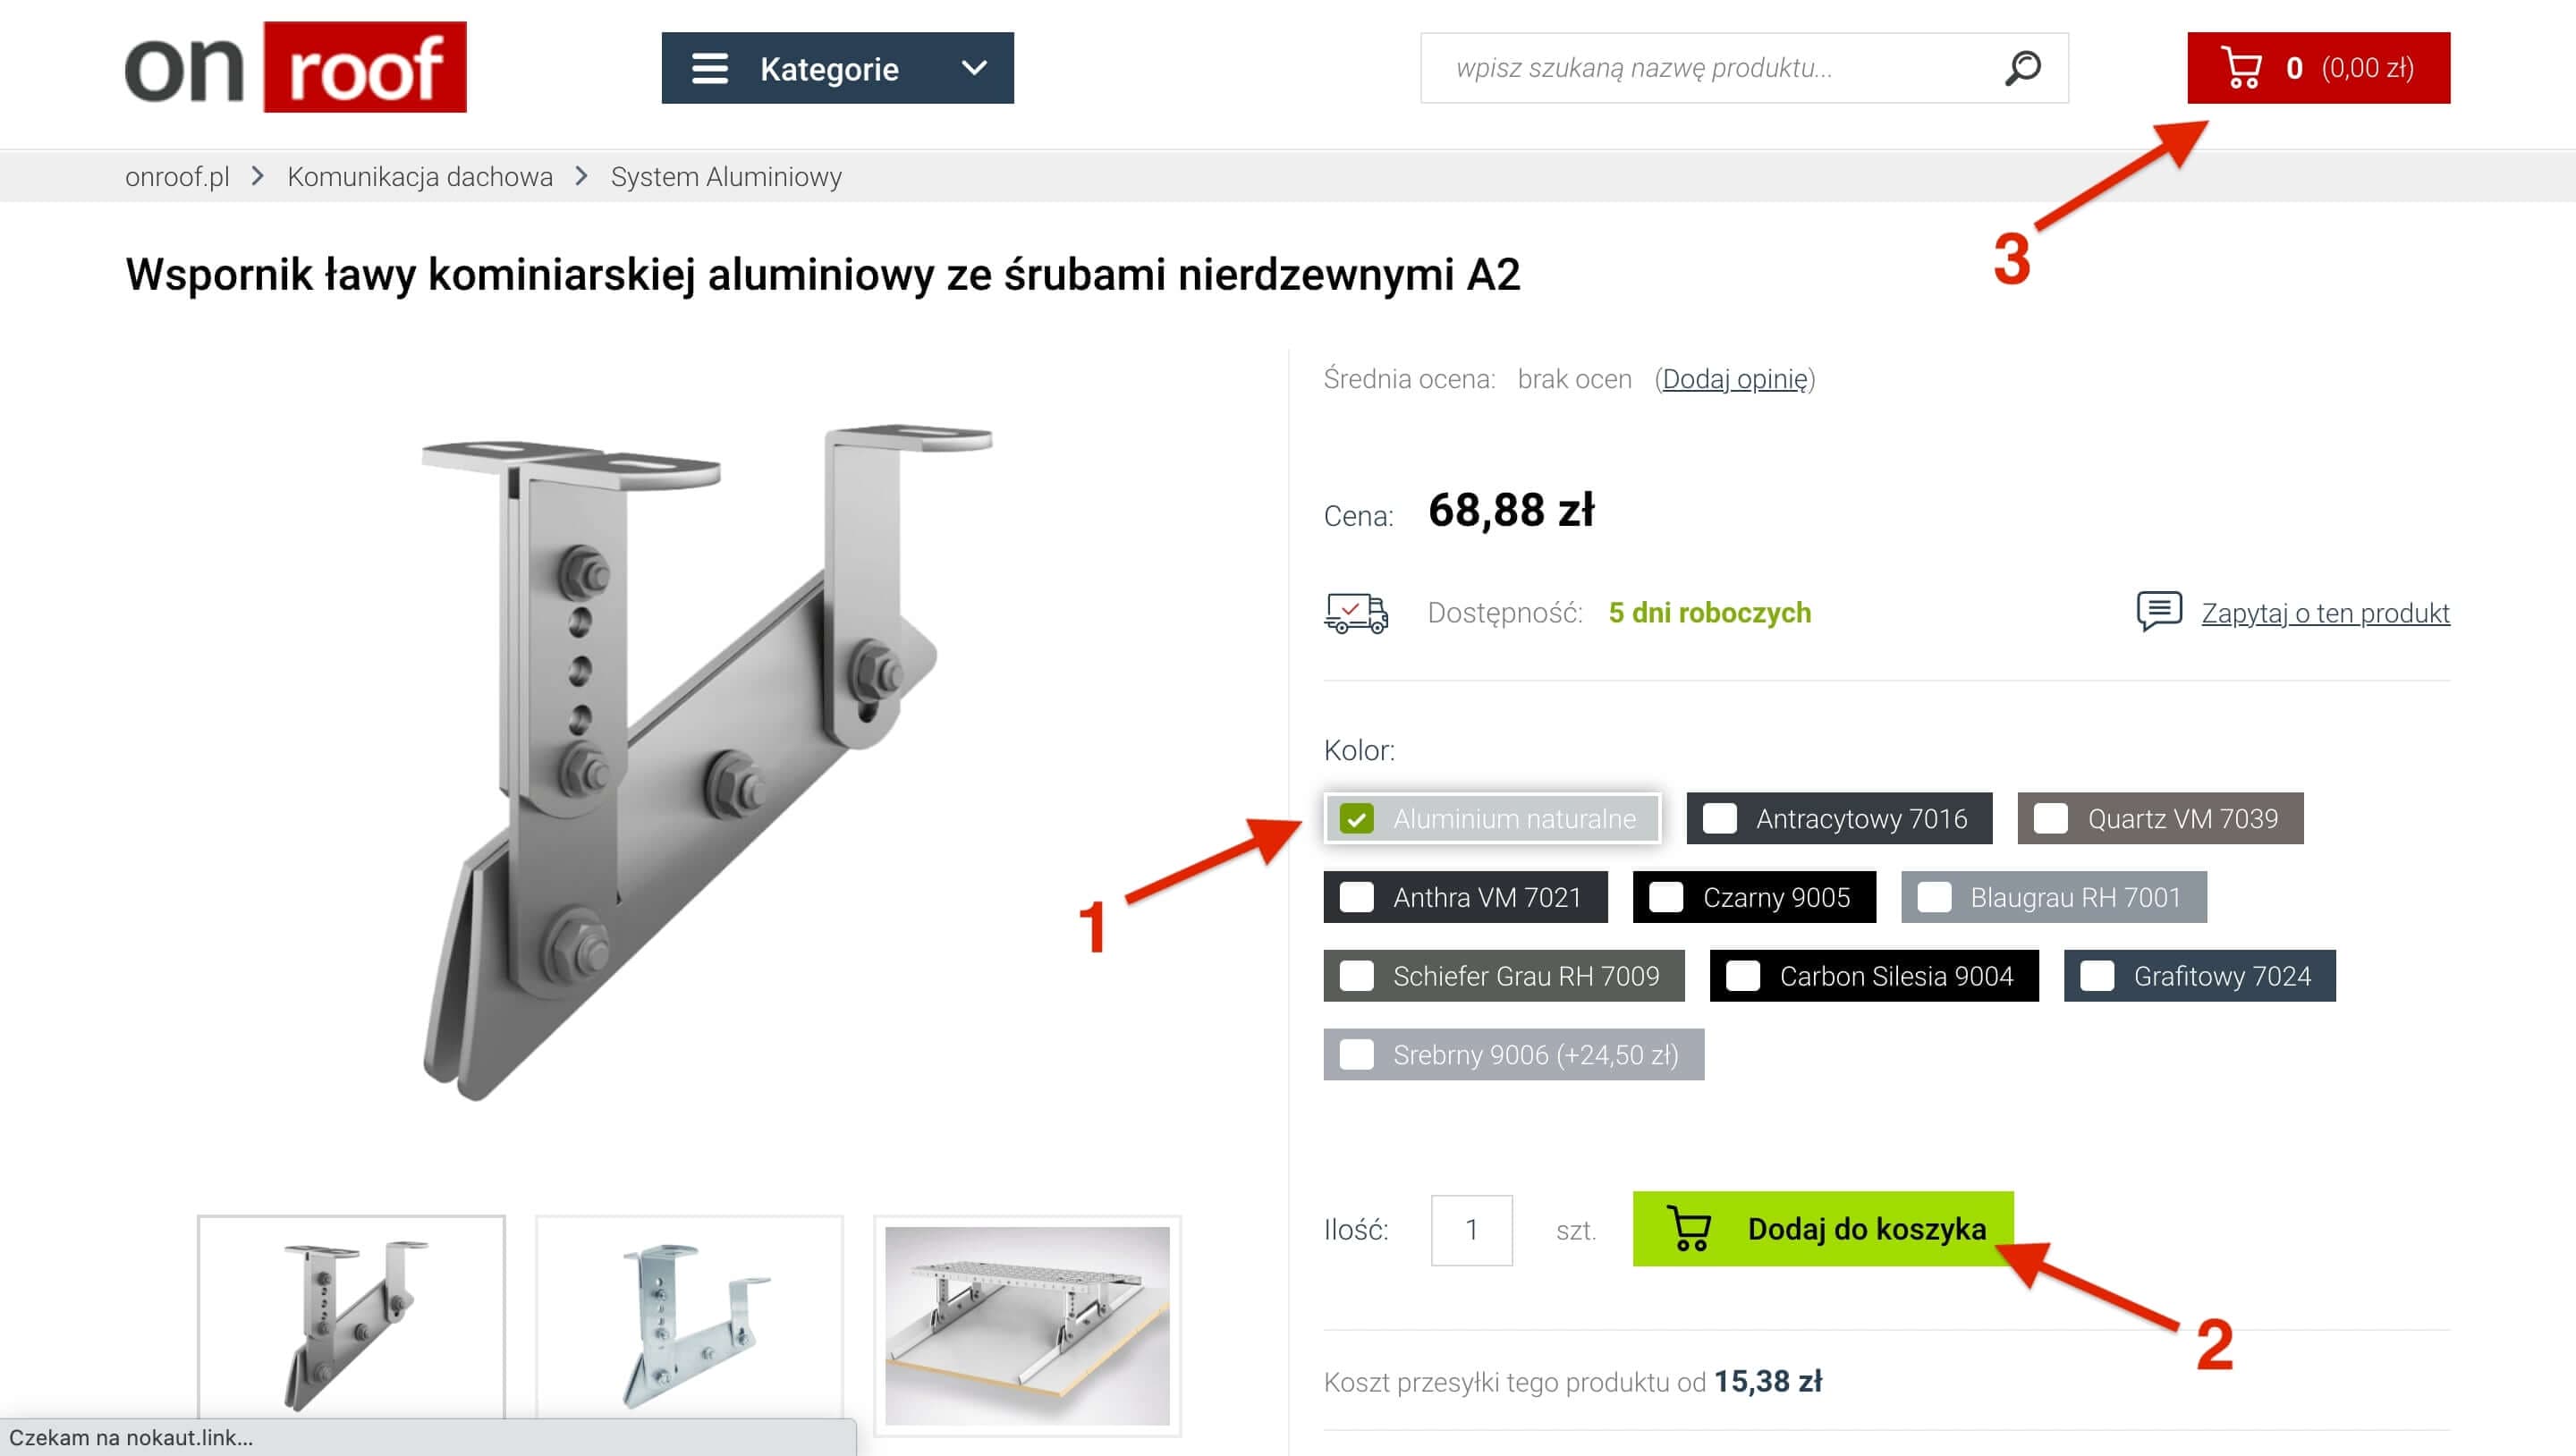 Jak kupować - instrukcja obsługi sklepu onroof.pl - screen 3